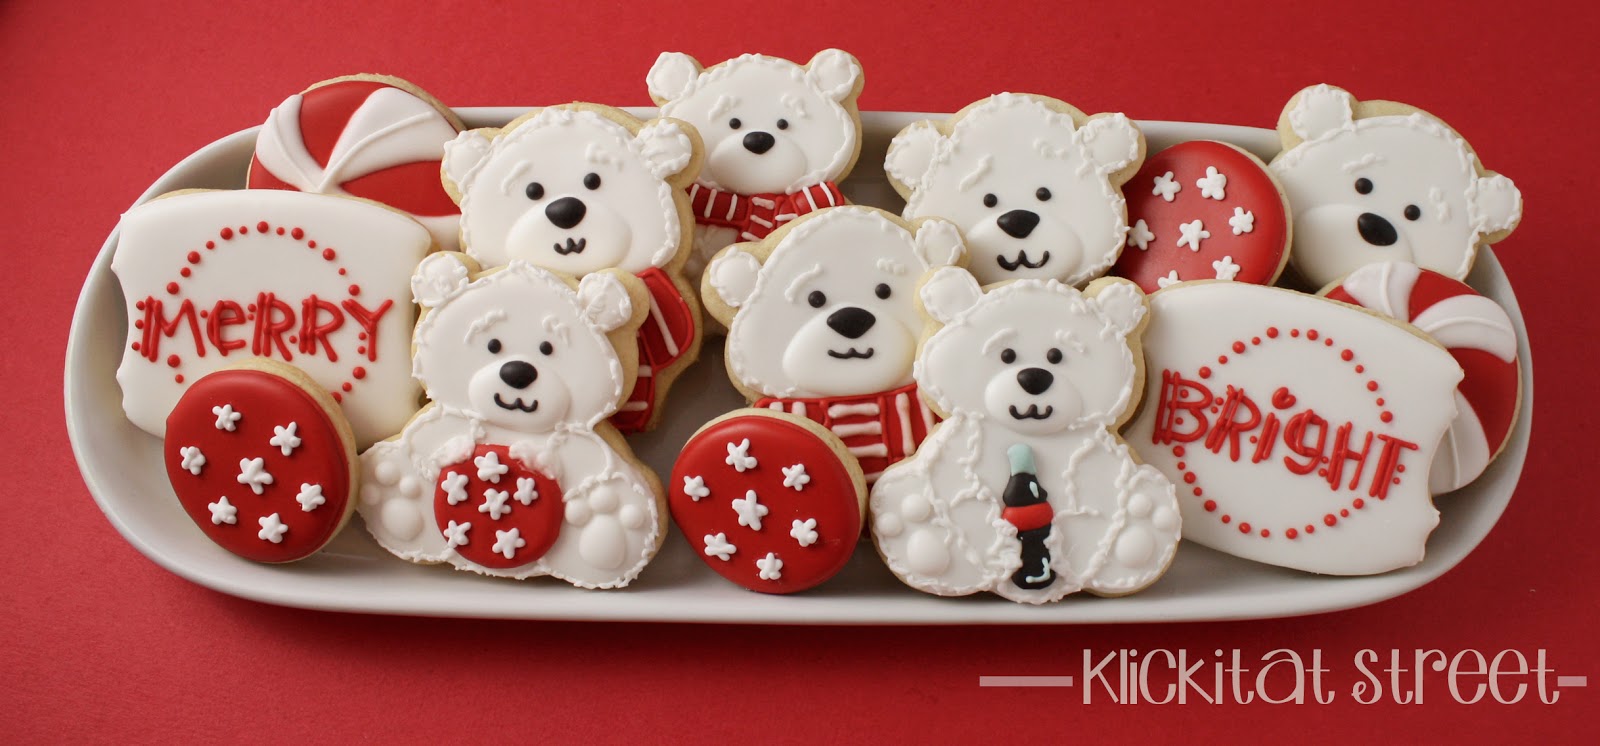 KlickitatStreet Coca Cola Polar Bears Cookie Platter